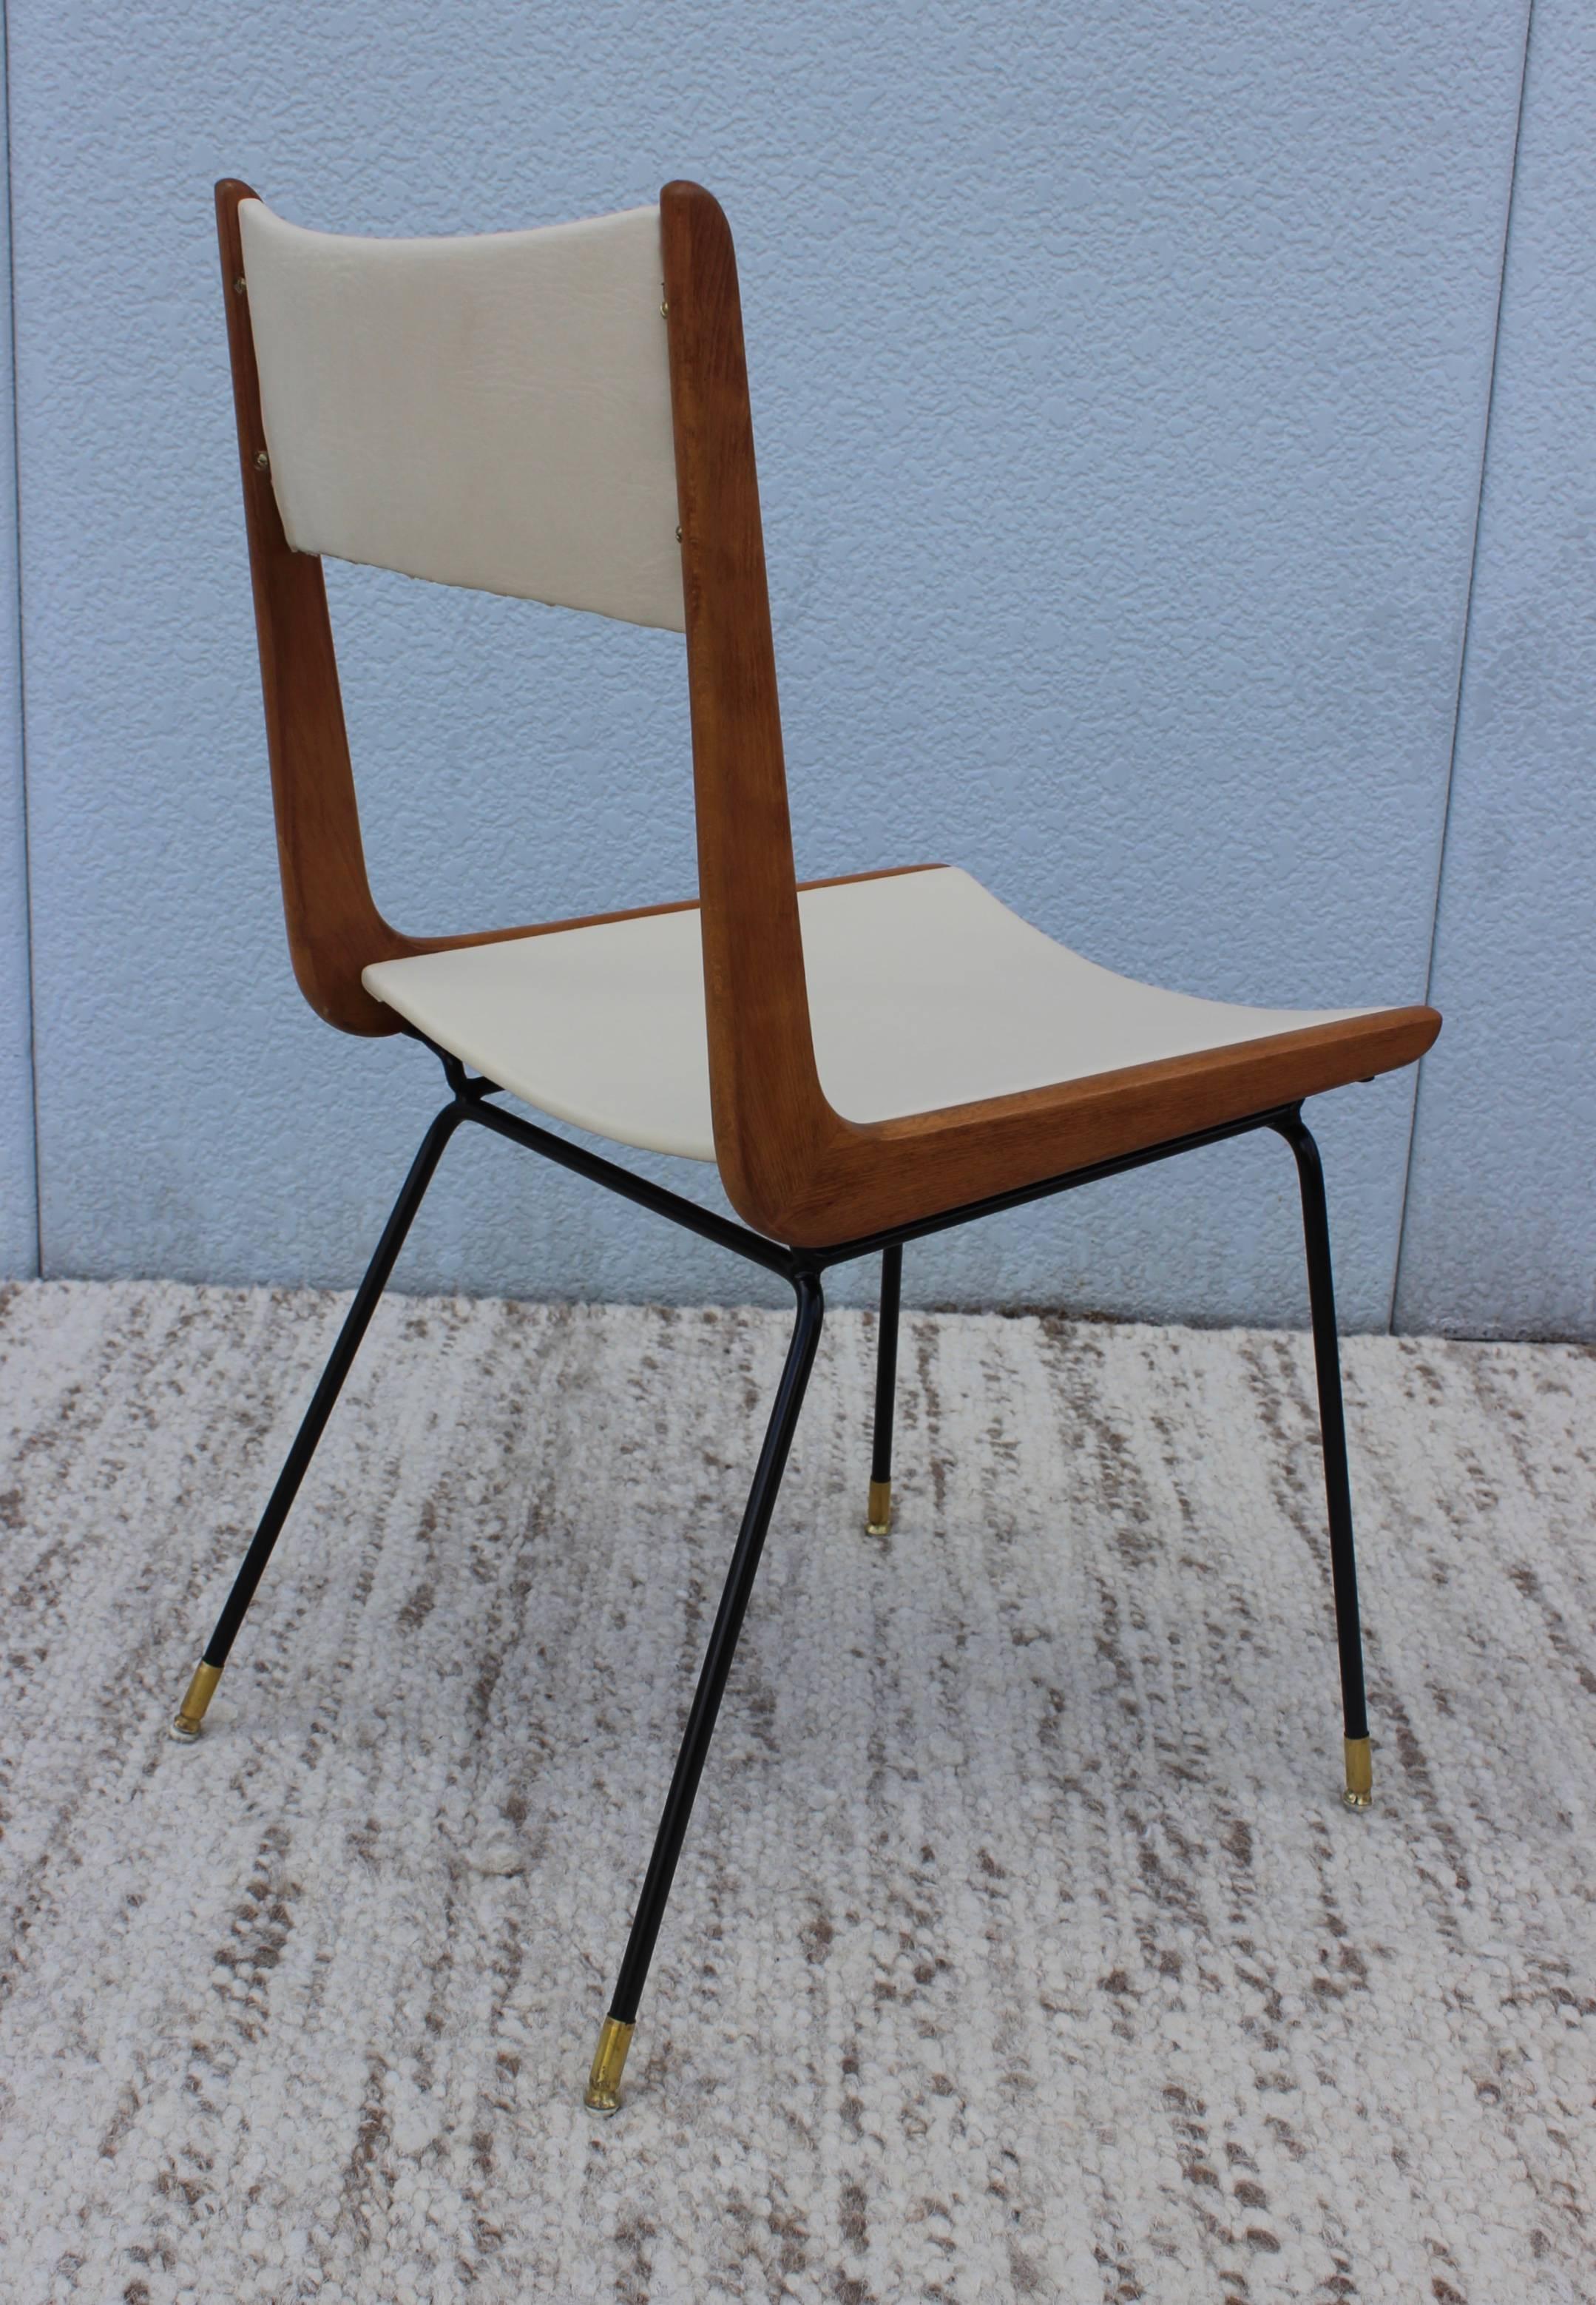 20th Century Dining Chairs, style of Carlo di Carli, ca. 1958